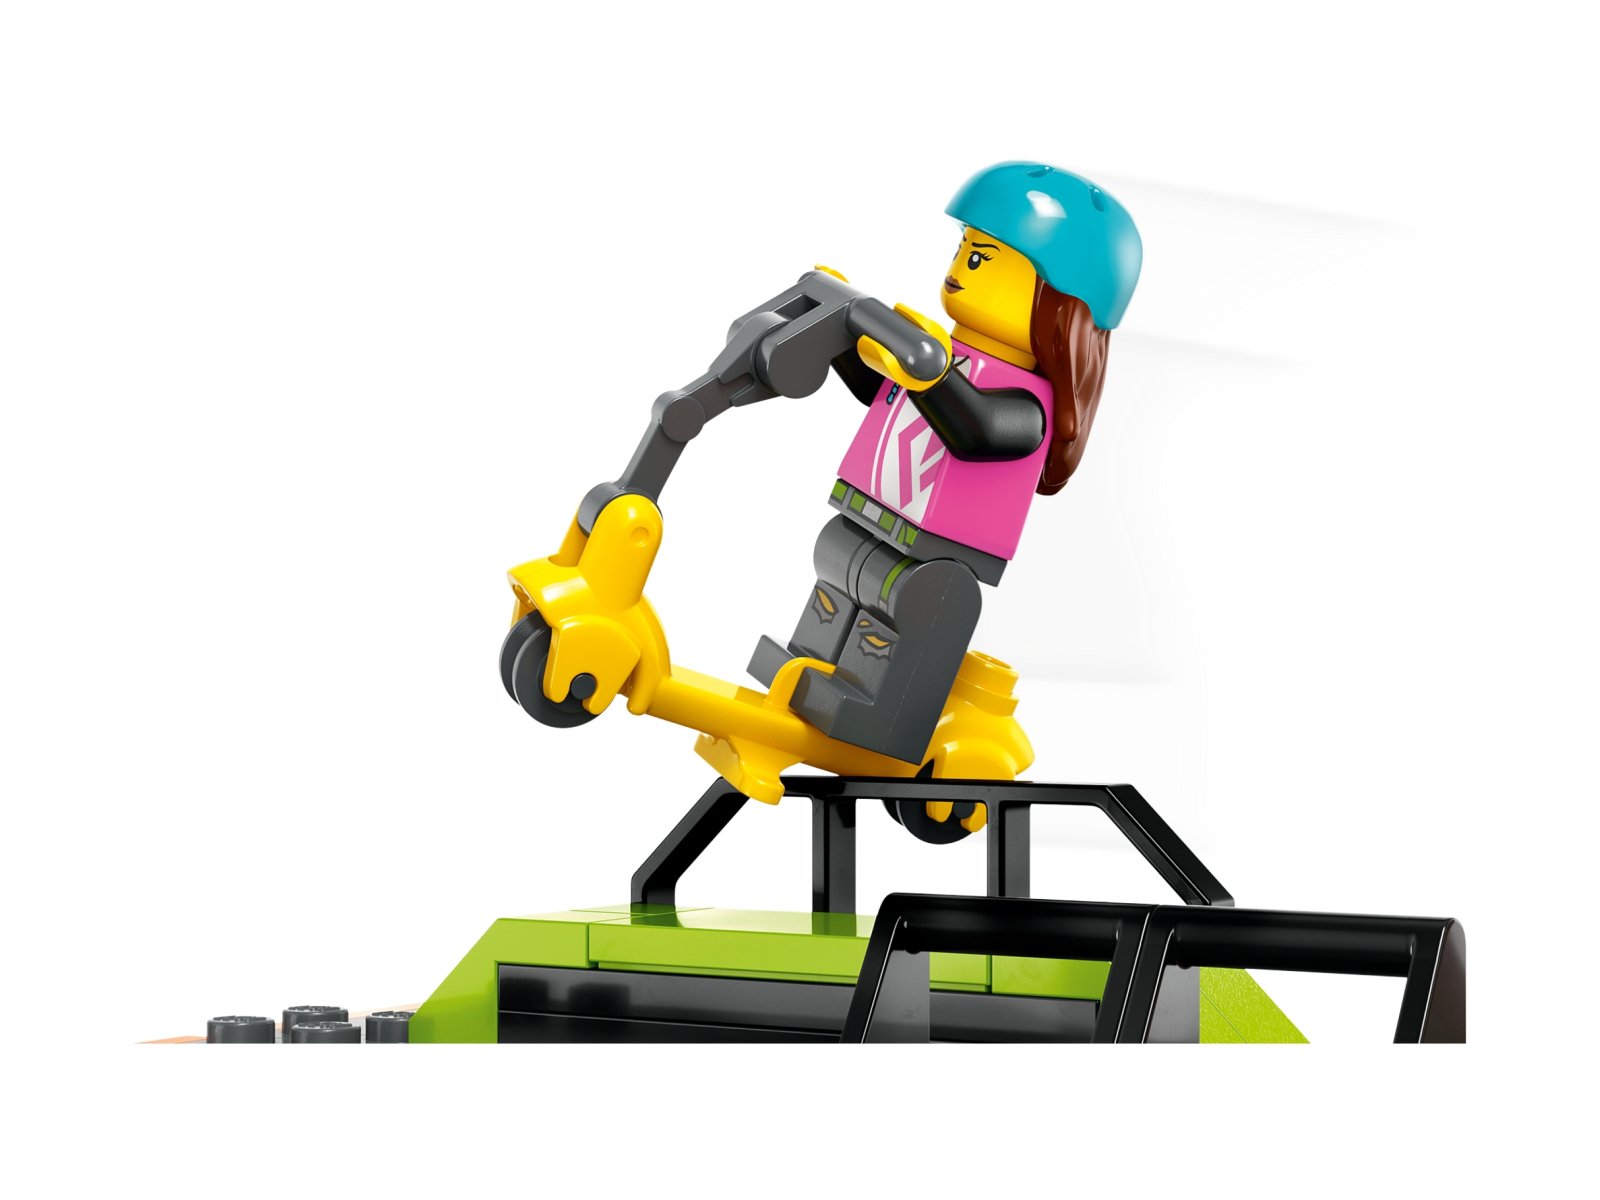 LEGO 60364 Uliczny skatepark